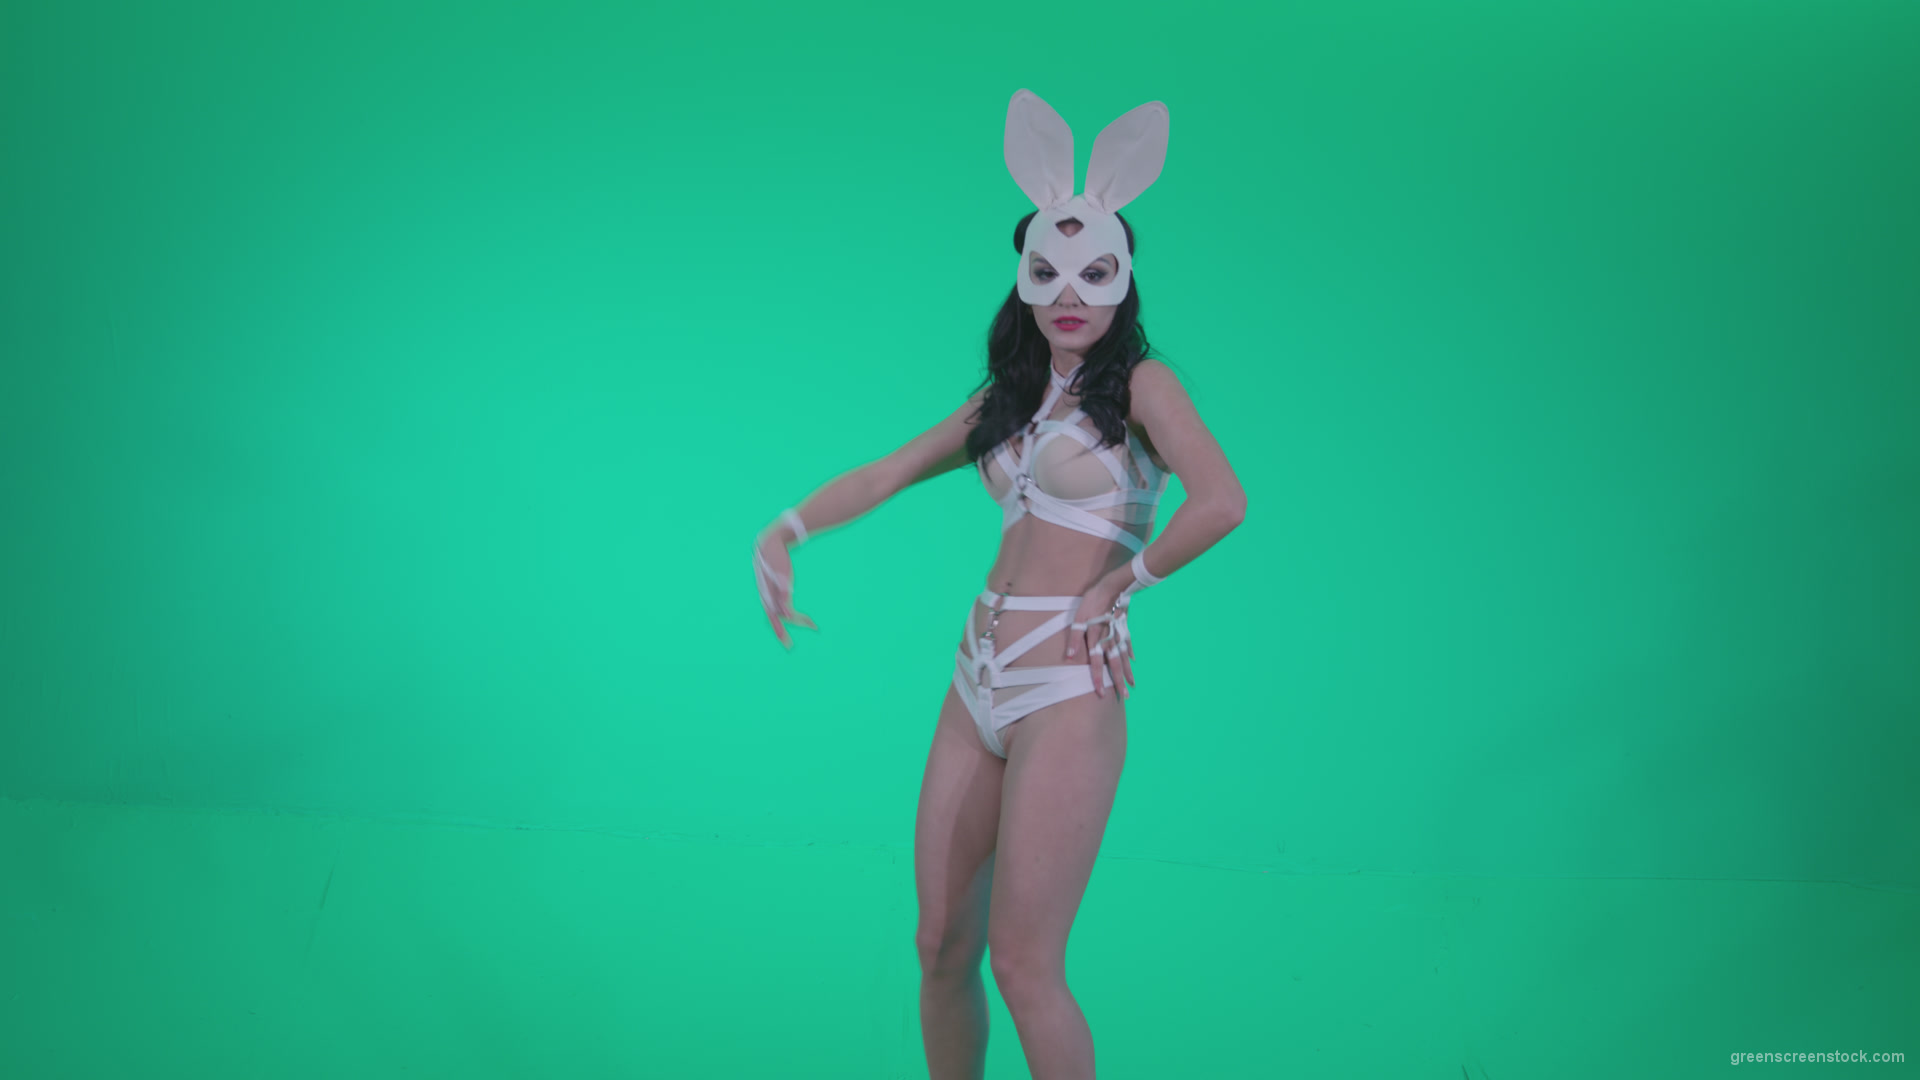 Go-go-Dancer-White-Rabbit-m11-Green-Screen-Video-Footage_001 Green Screen Stock